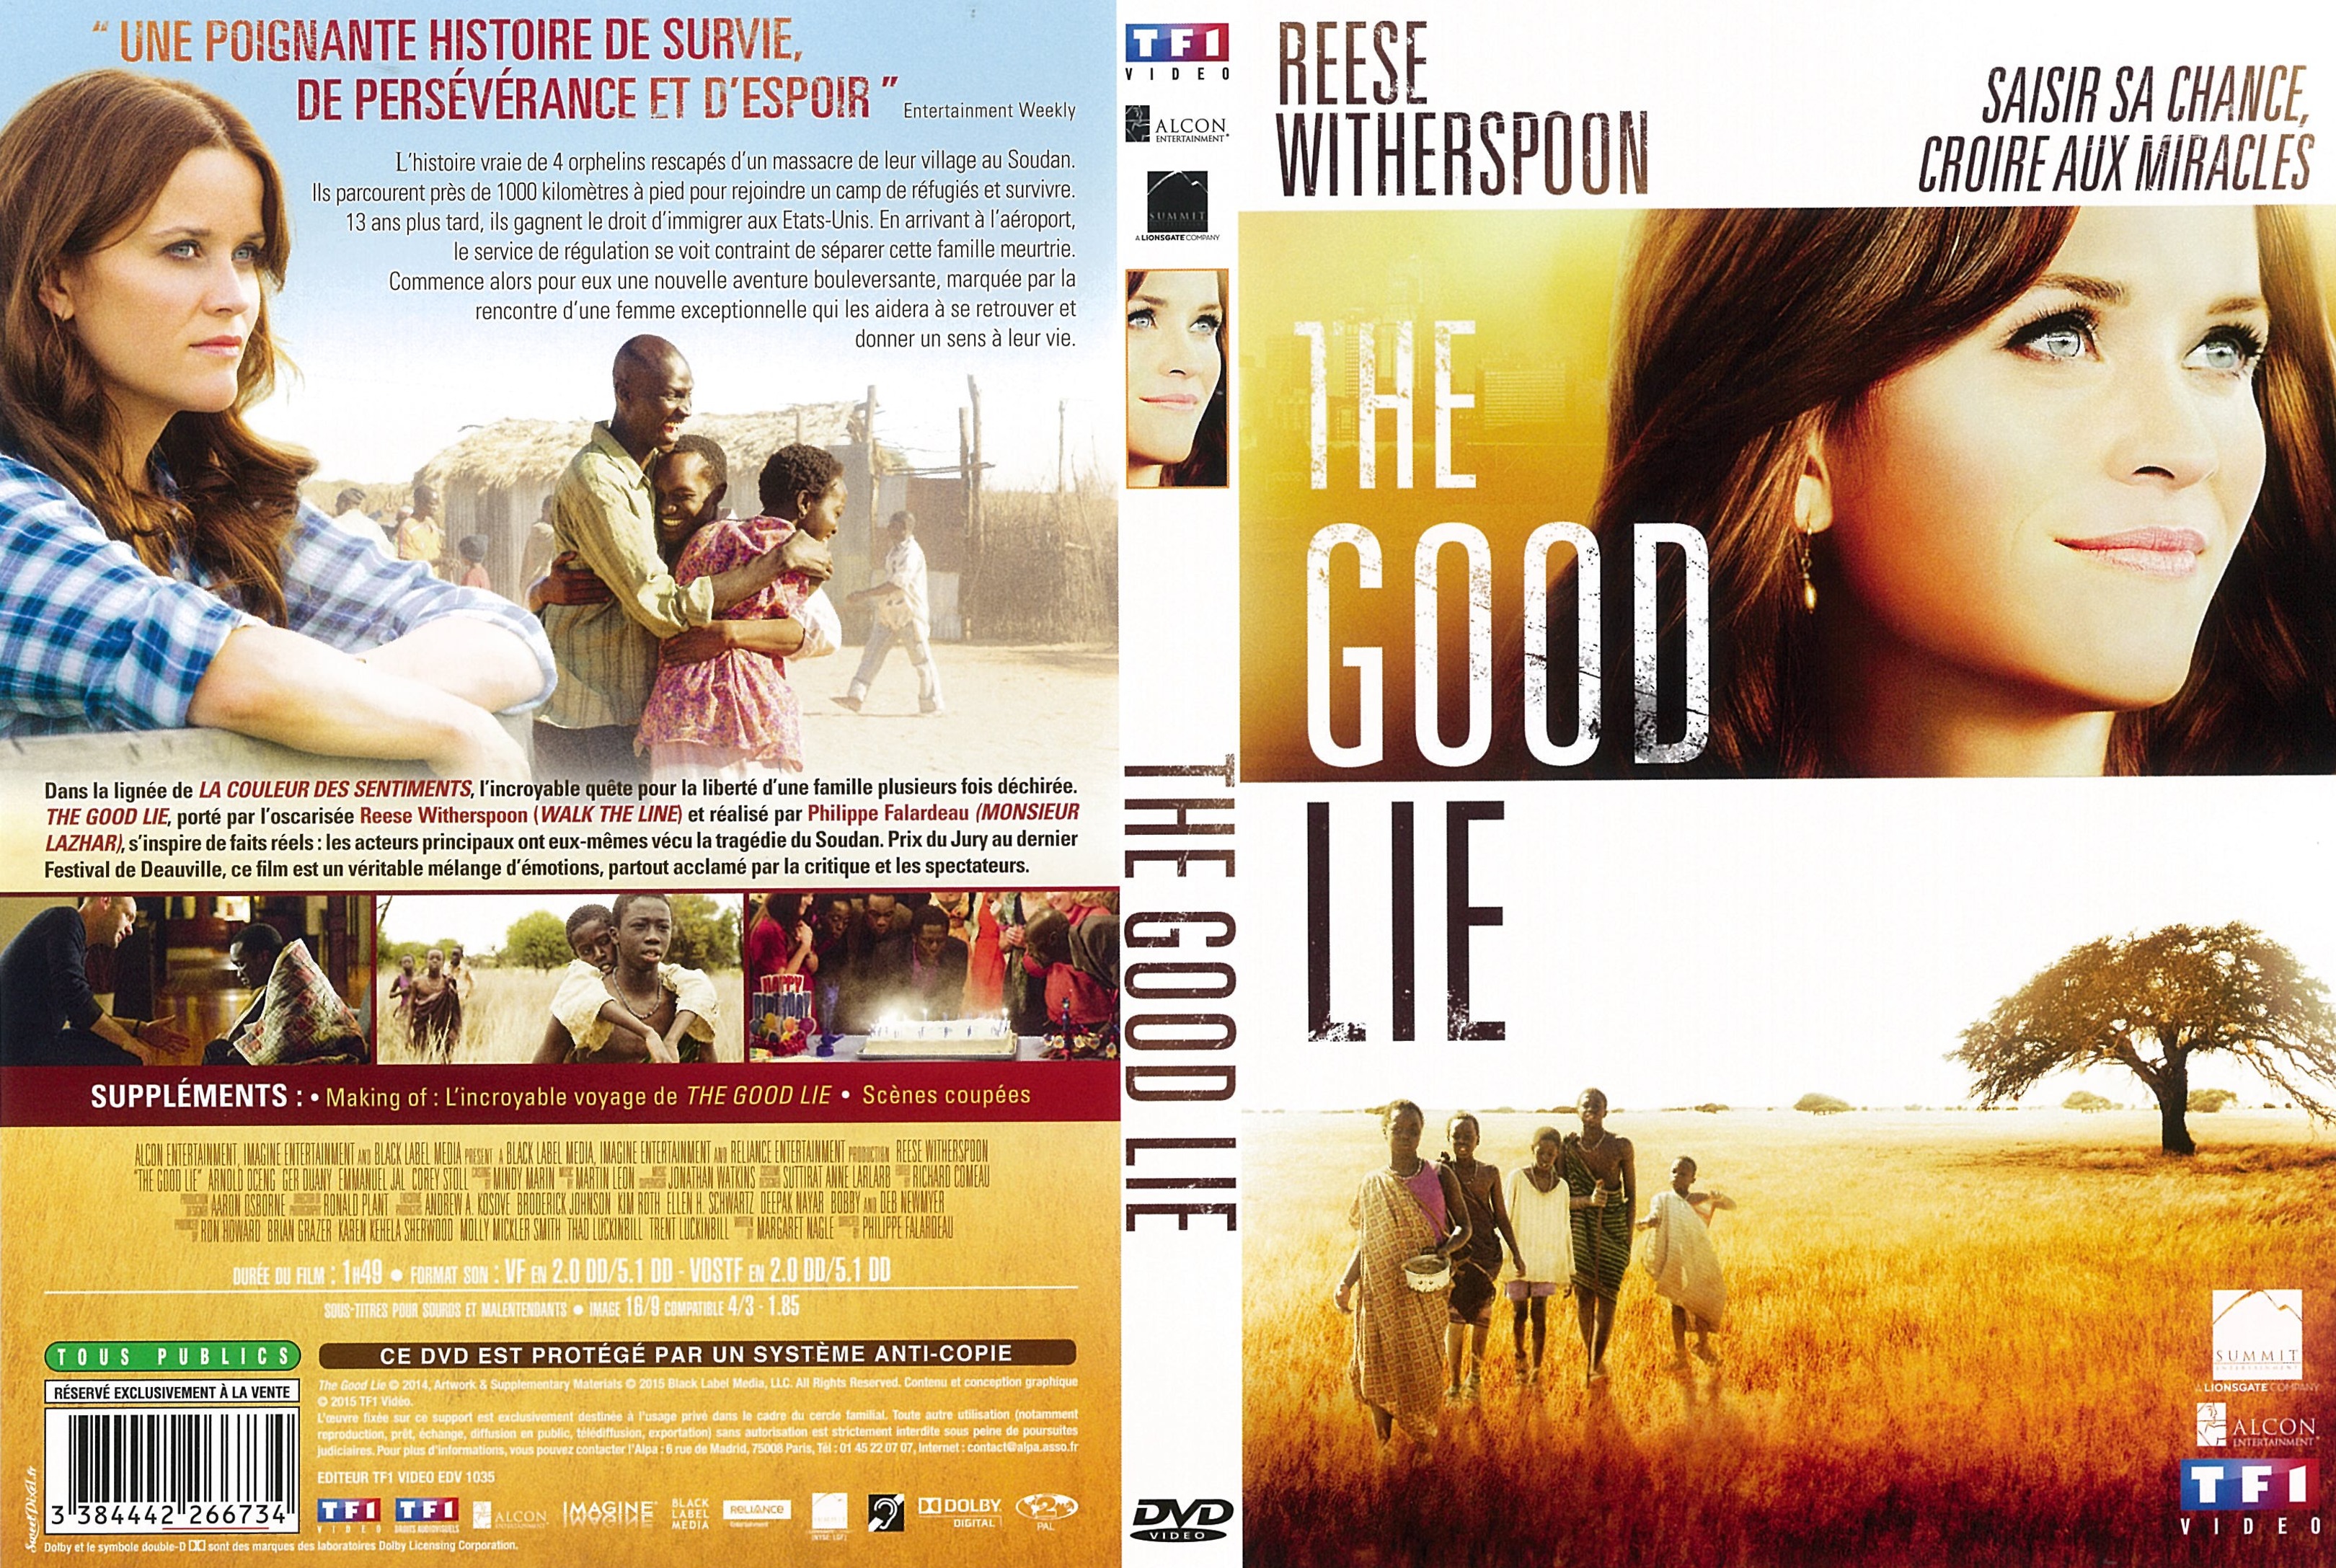 Jaquette DVD The Good Lie